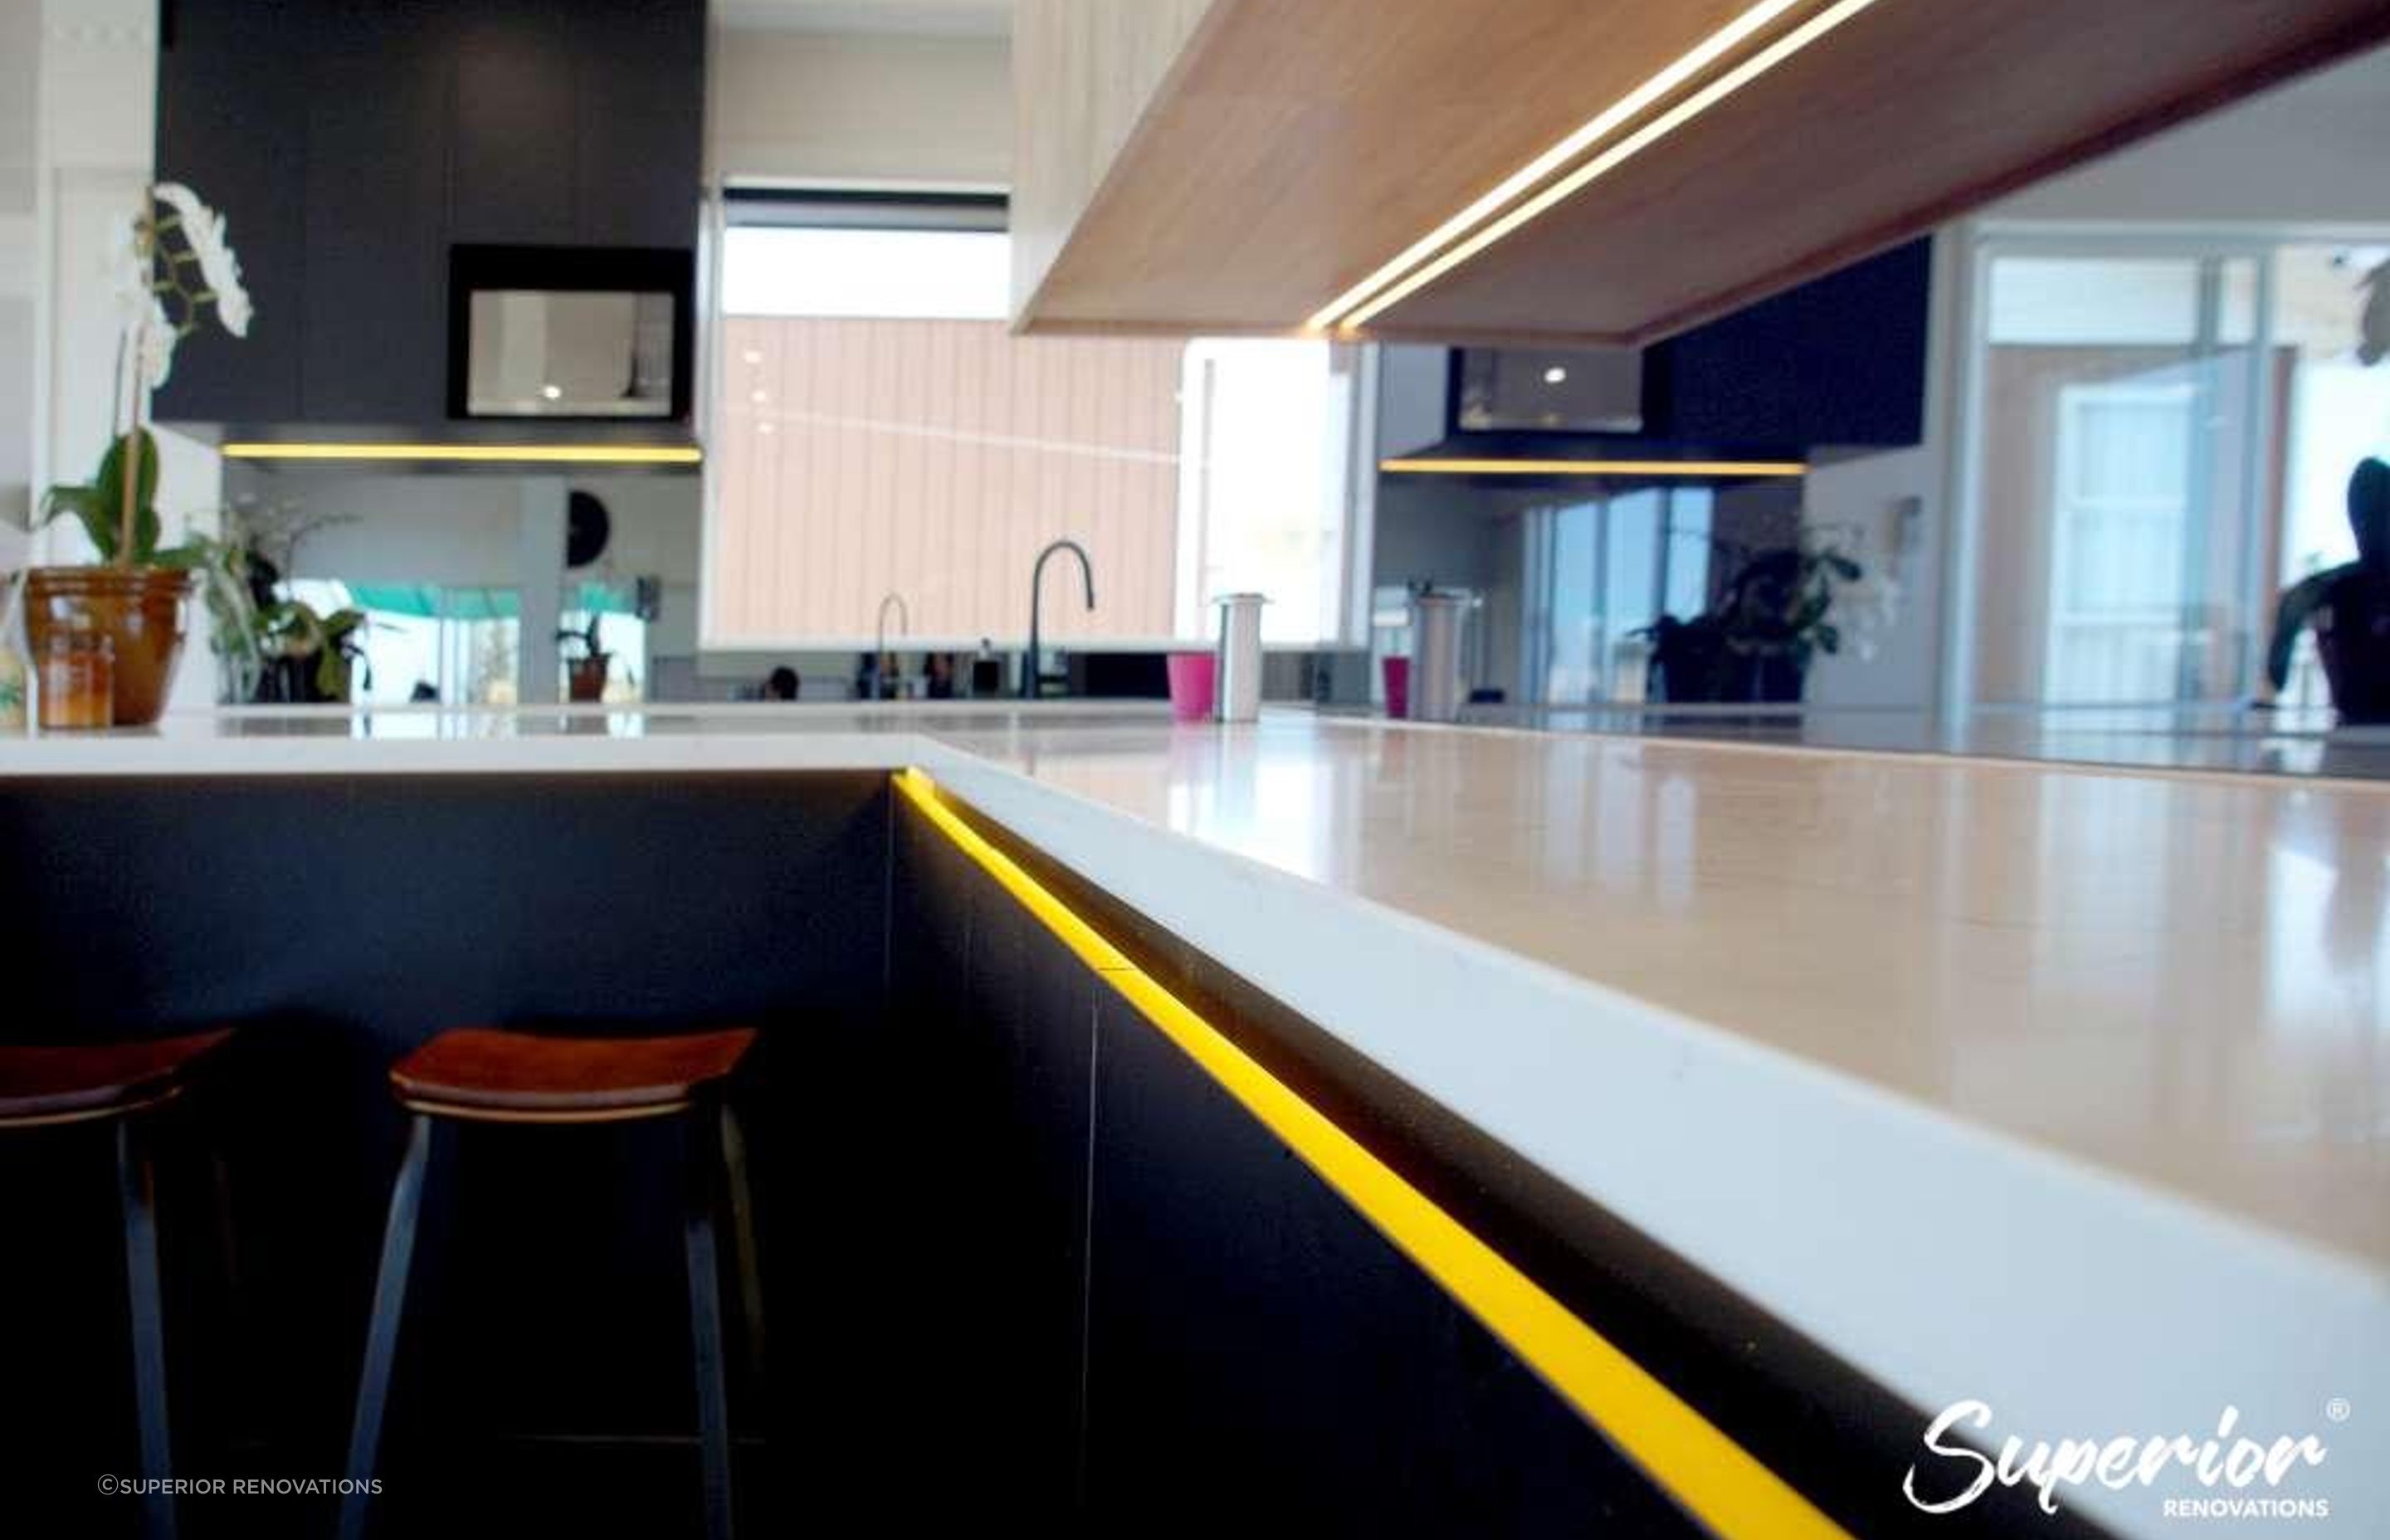 Top 16 Design Ideas for Small Kitchen Design NZ Guideline